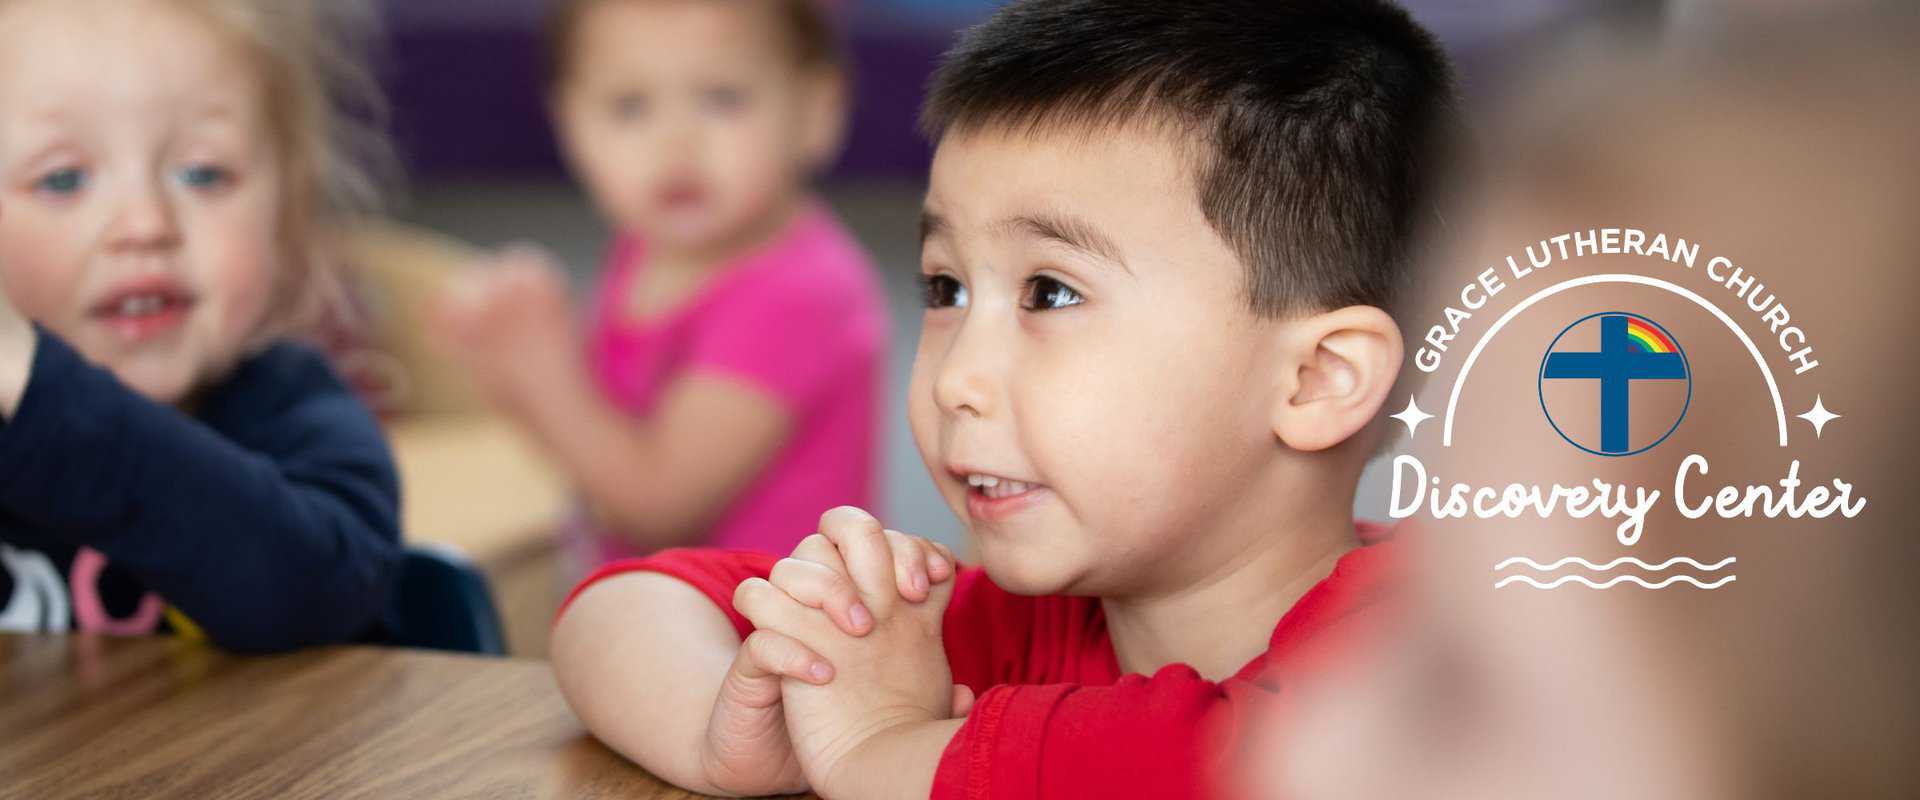 preschooler praying